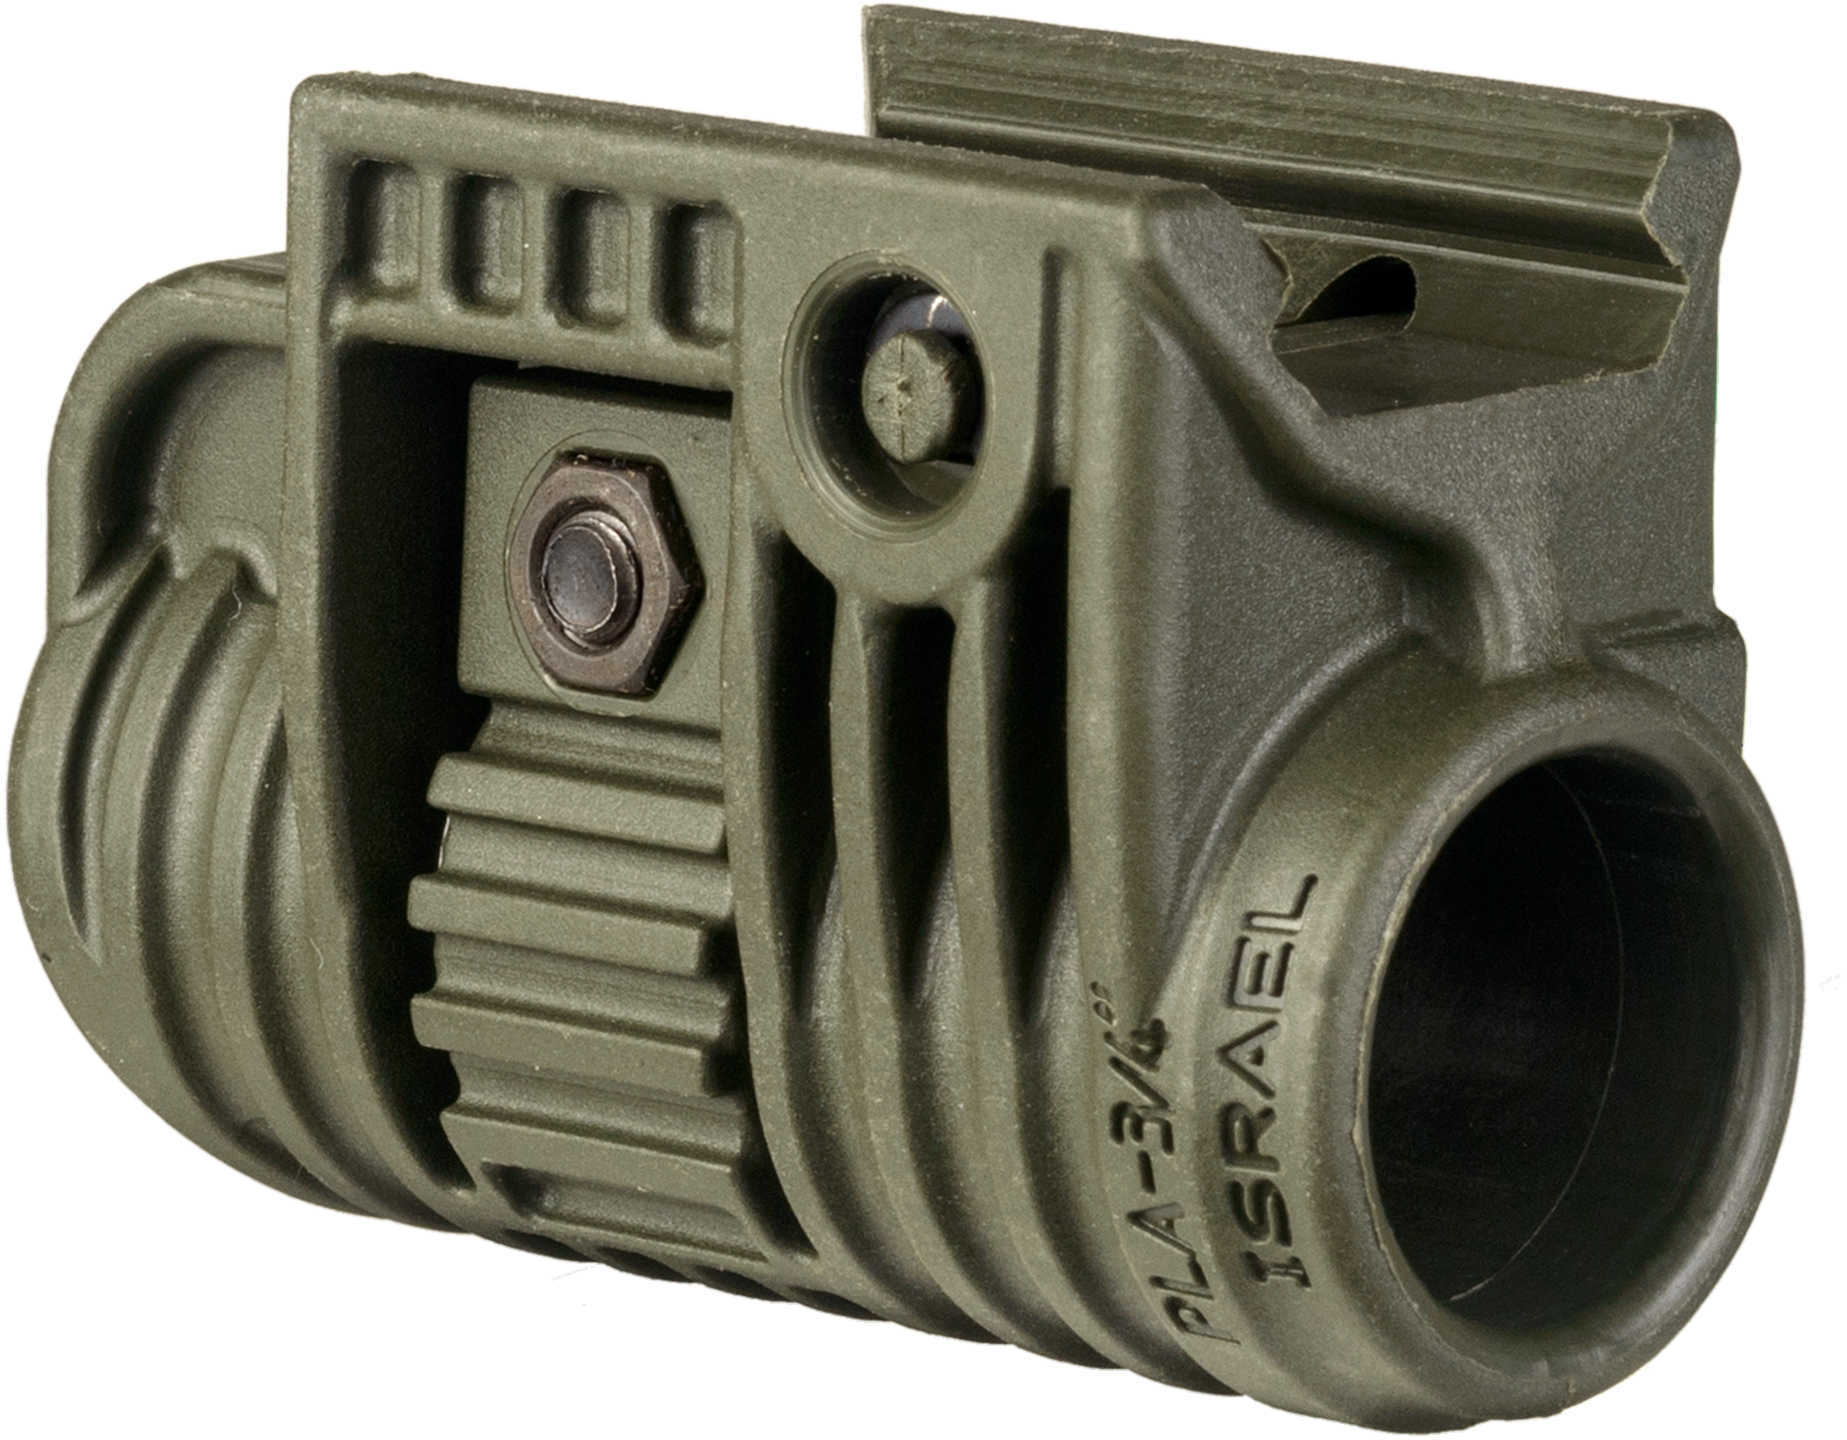 FAB Defense 3/4-inch Tactical Light/laser Adapter Green